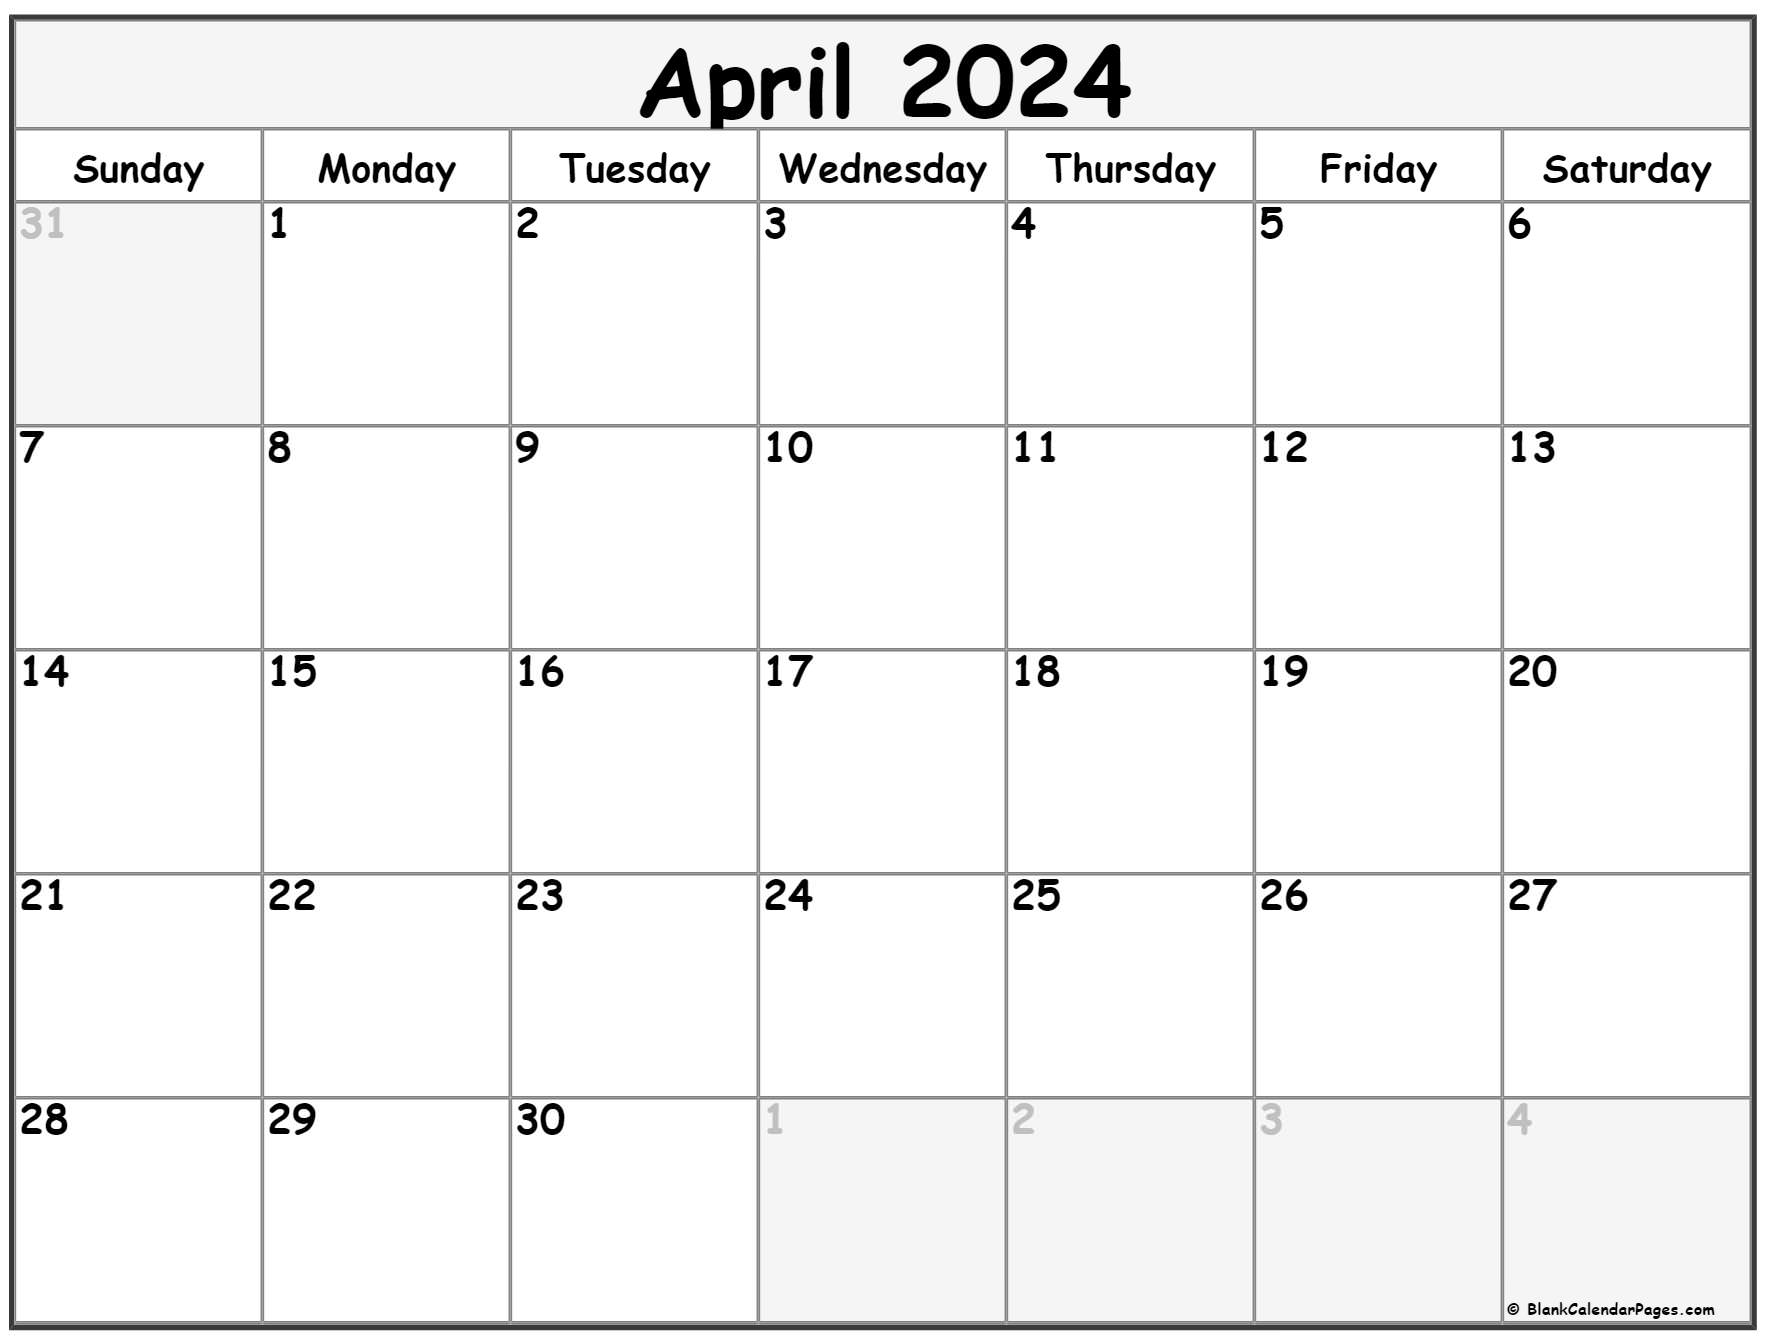 April 2024 calendar | free printable calendar